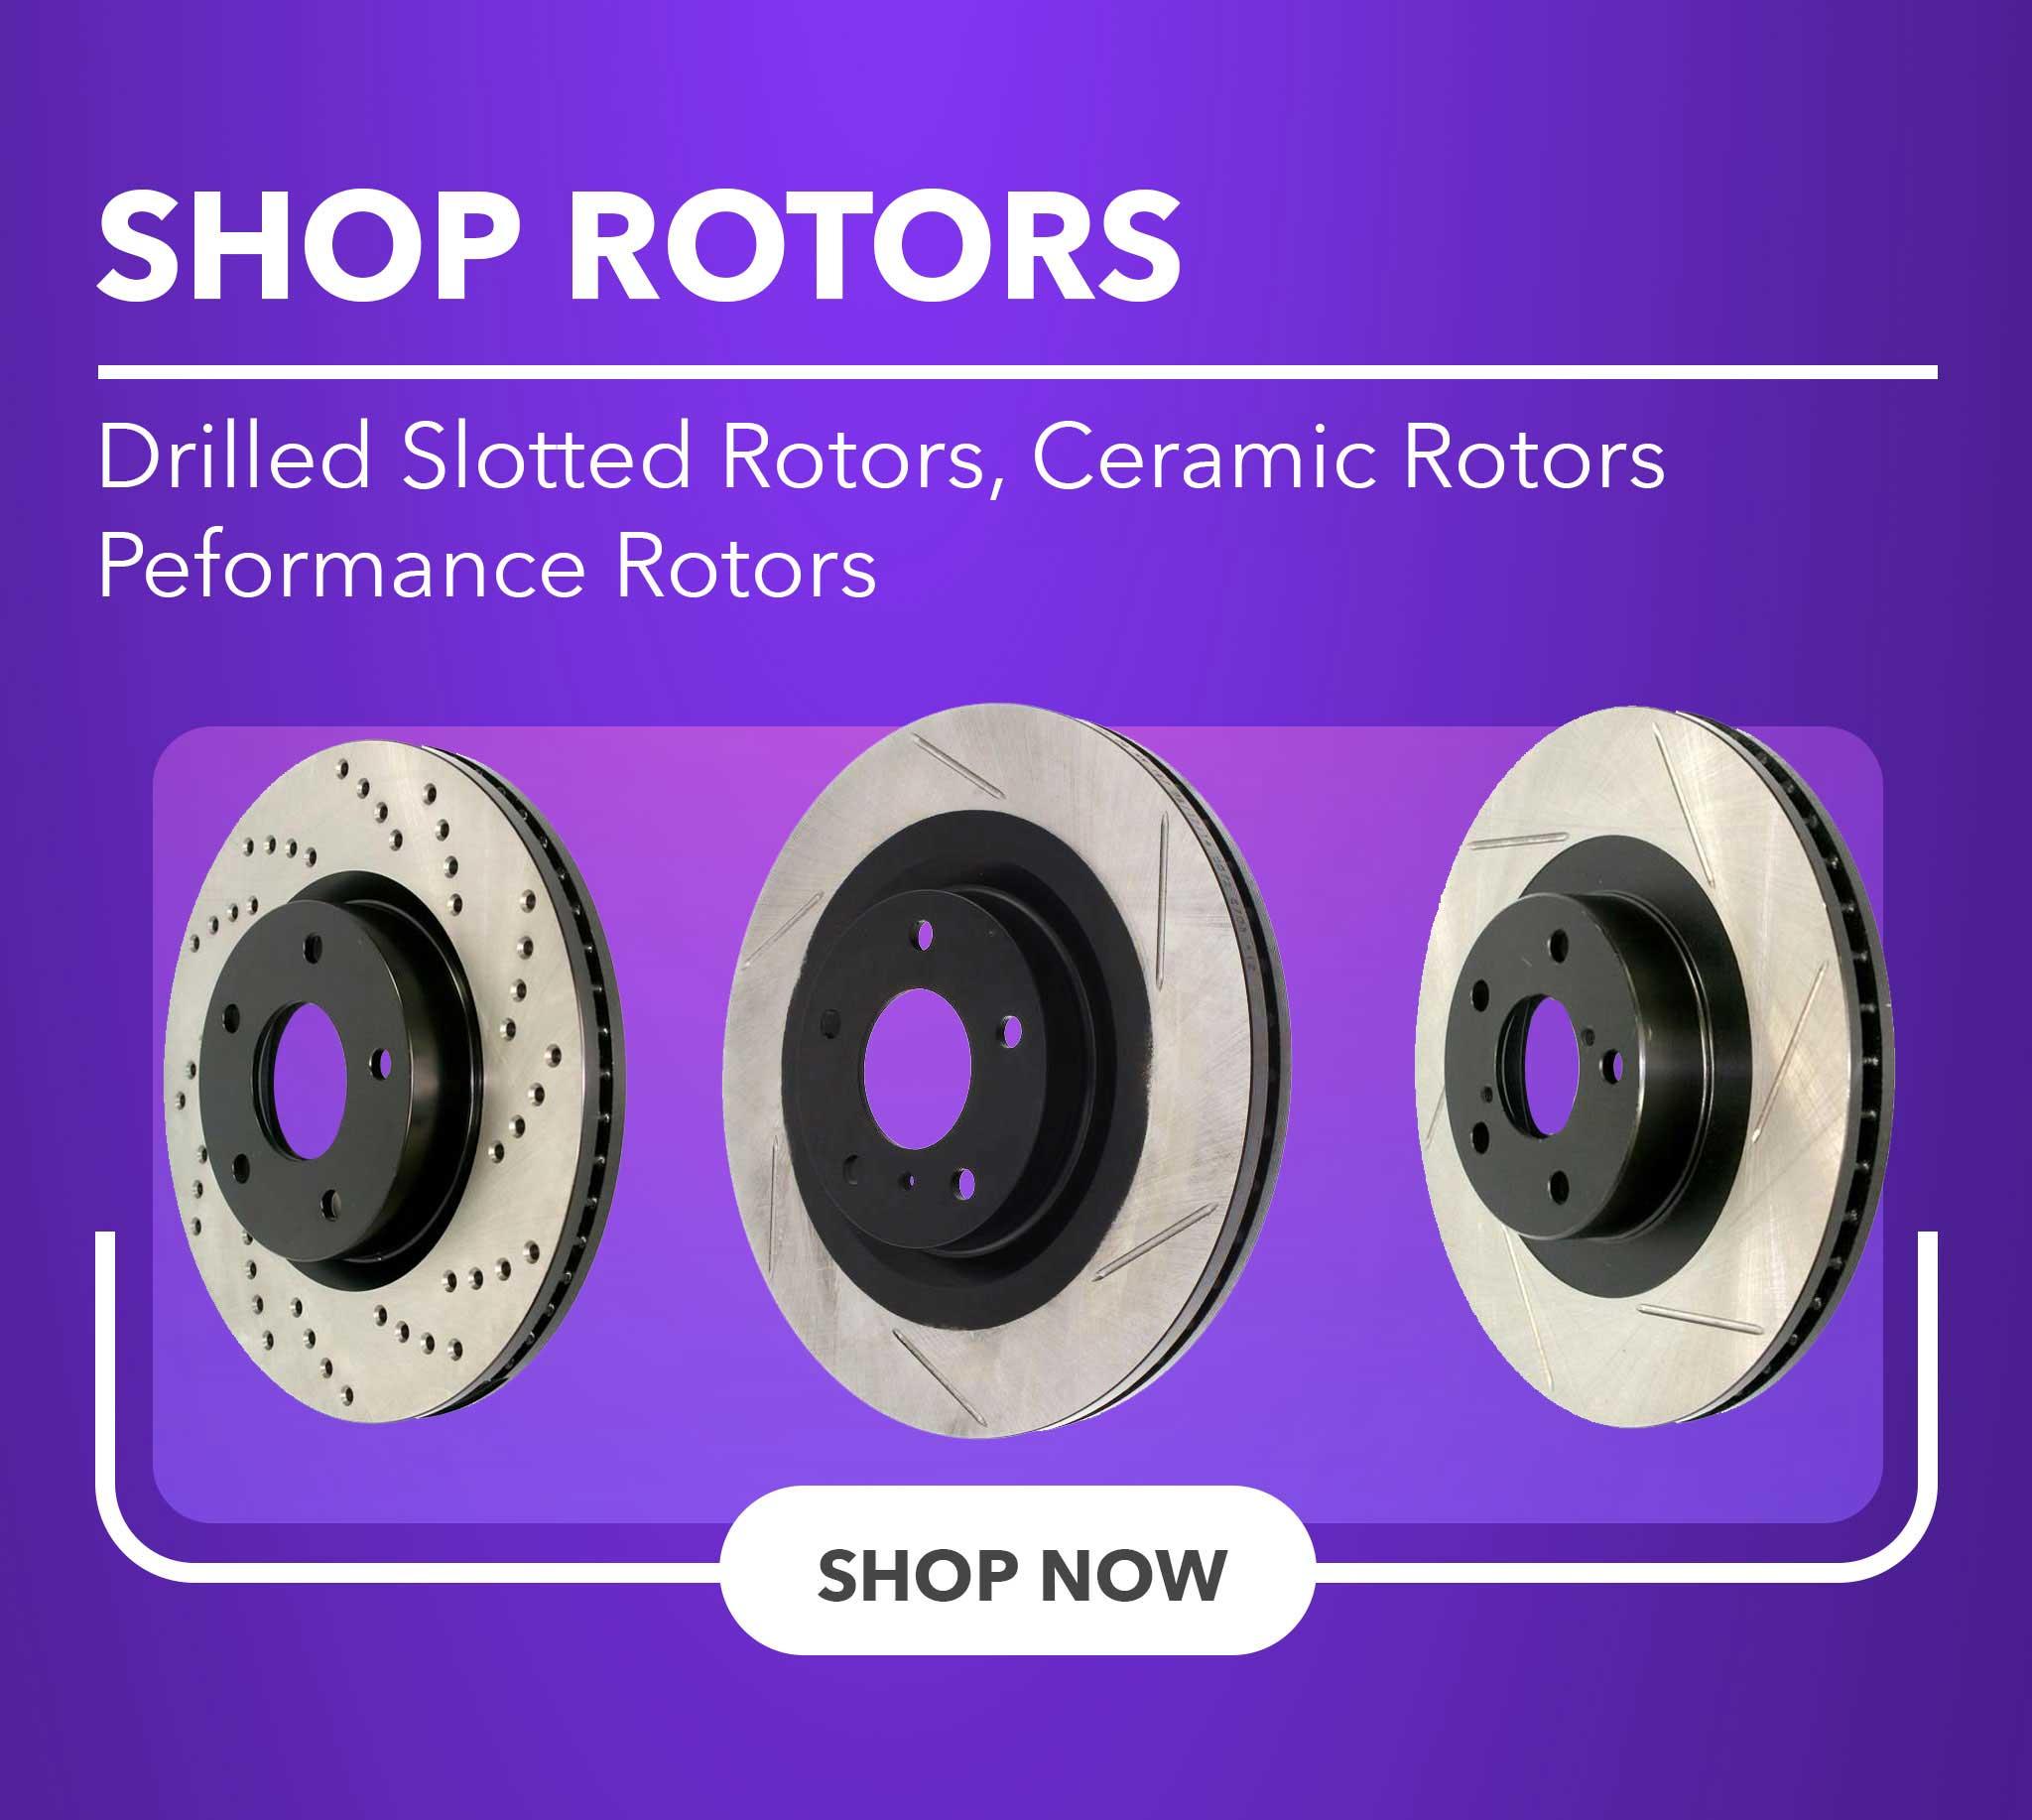 Drilled Slotted Rotors, Ceramic Rotors, Performance Rotors